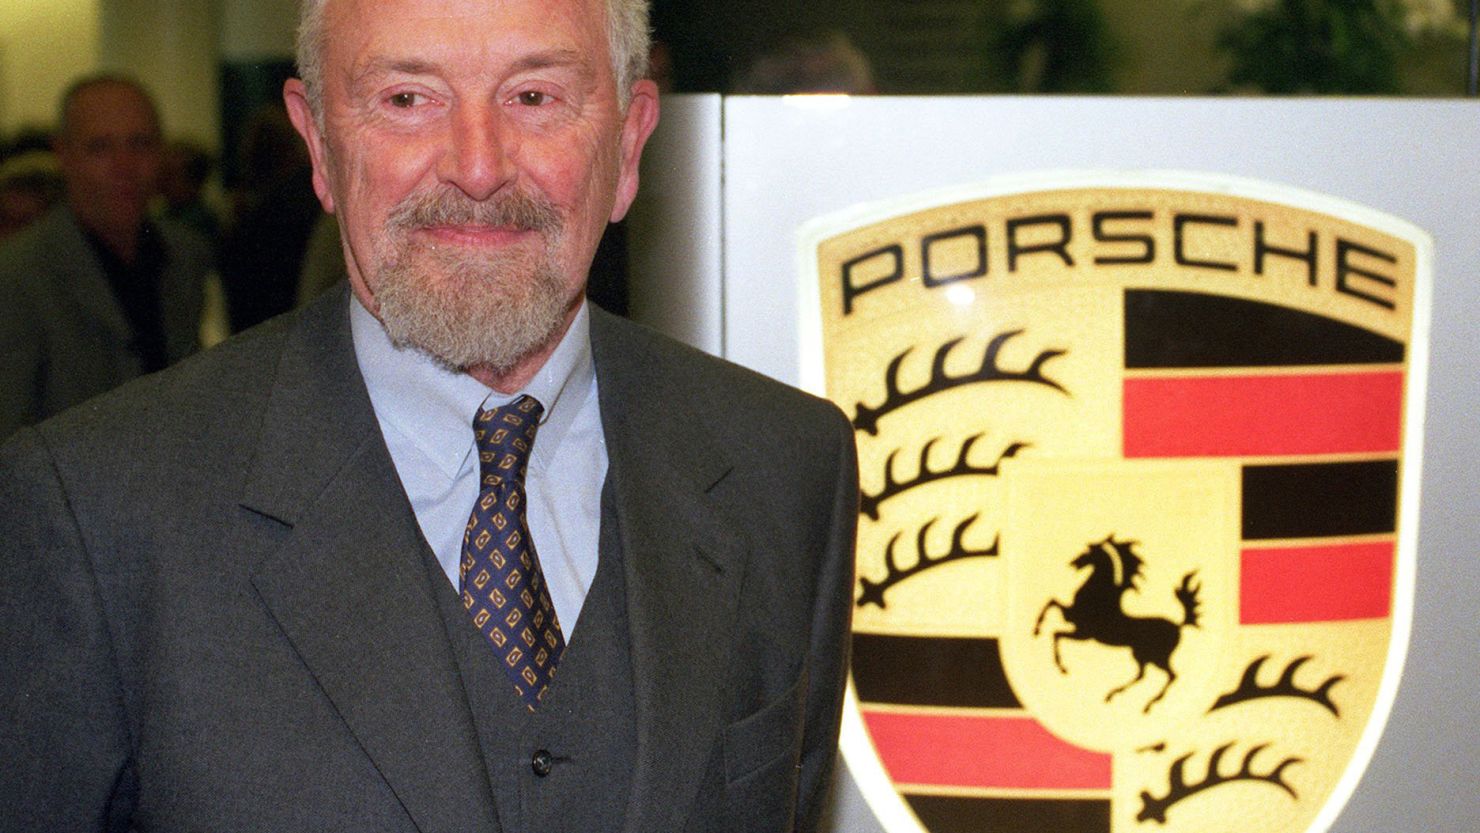 Picture from January 22, 1999 shows Ferdinand Alexander Porsche next to the logo of German car maker Porsche in Stuttgart.